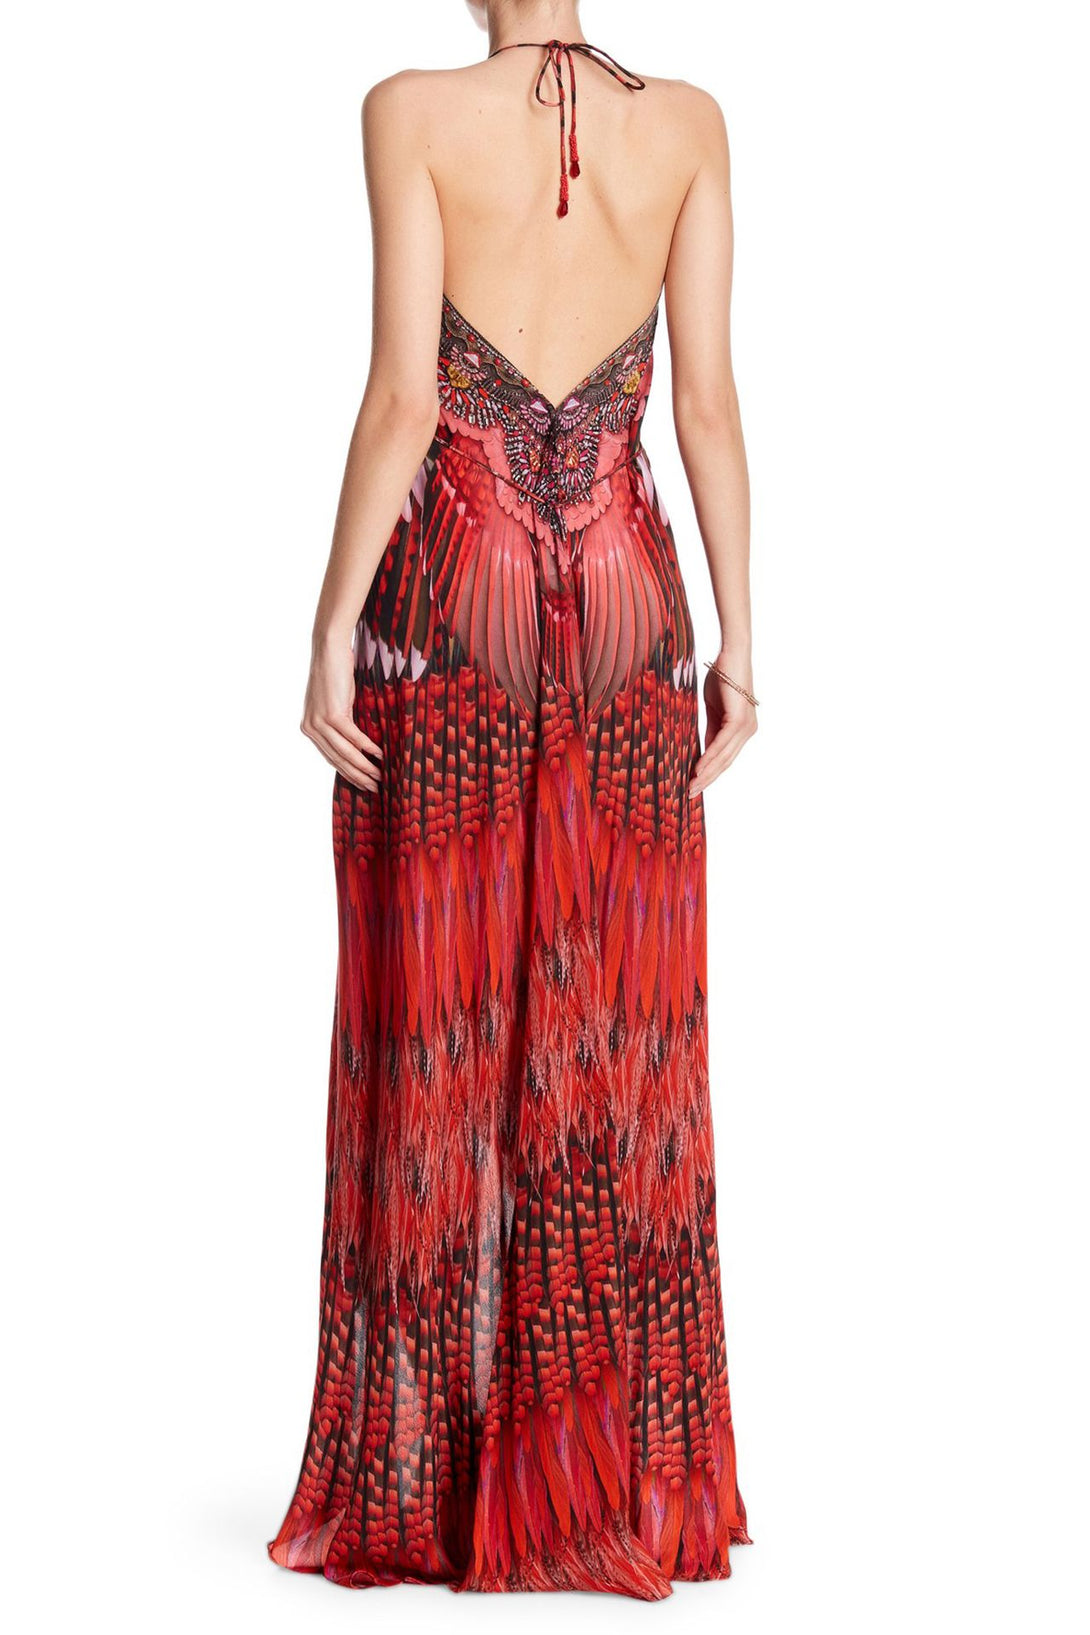  red cocktail dress, Shahida Parides, beach maxi dress, long summer dresses, backless maxi dress,